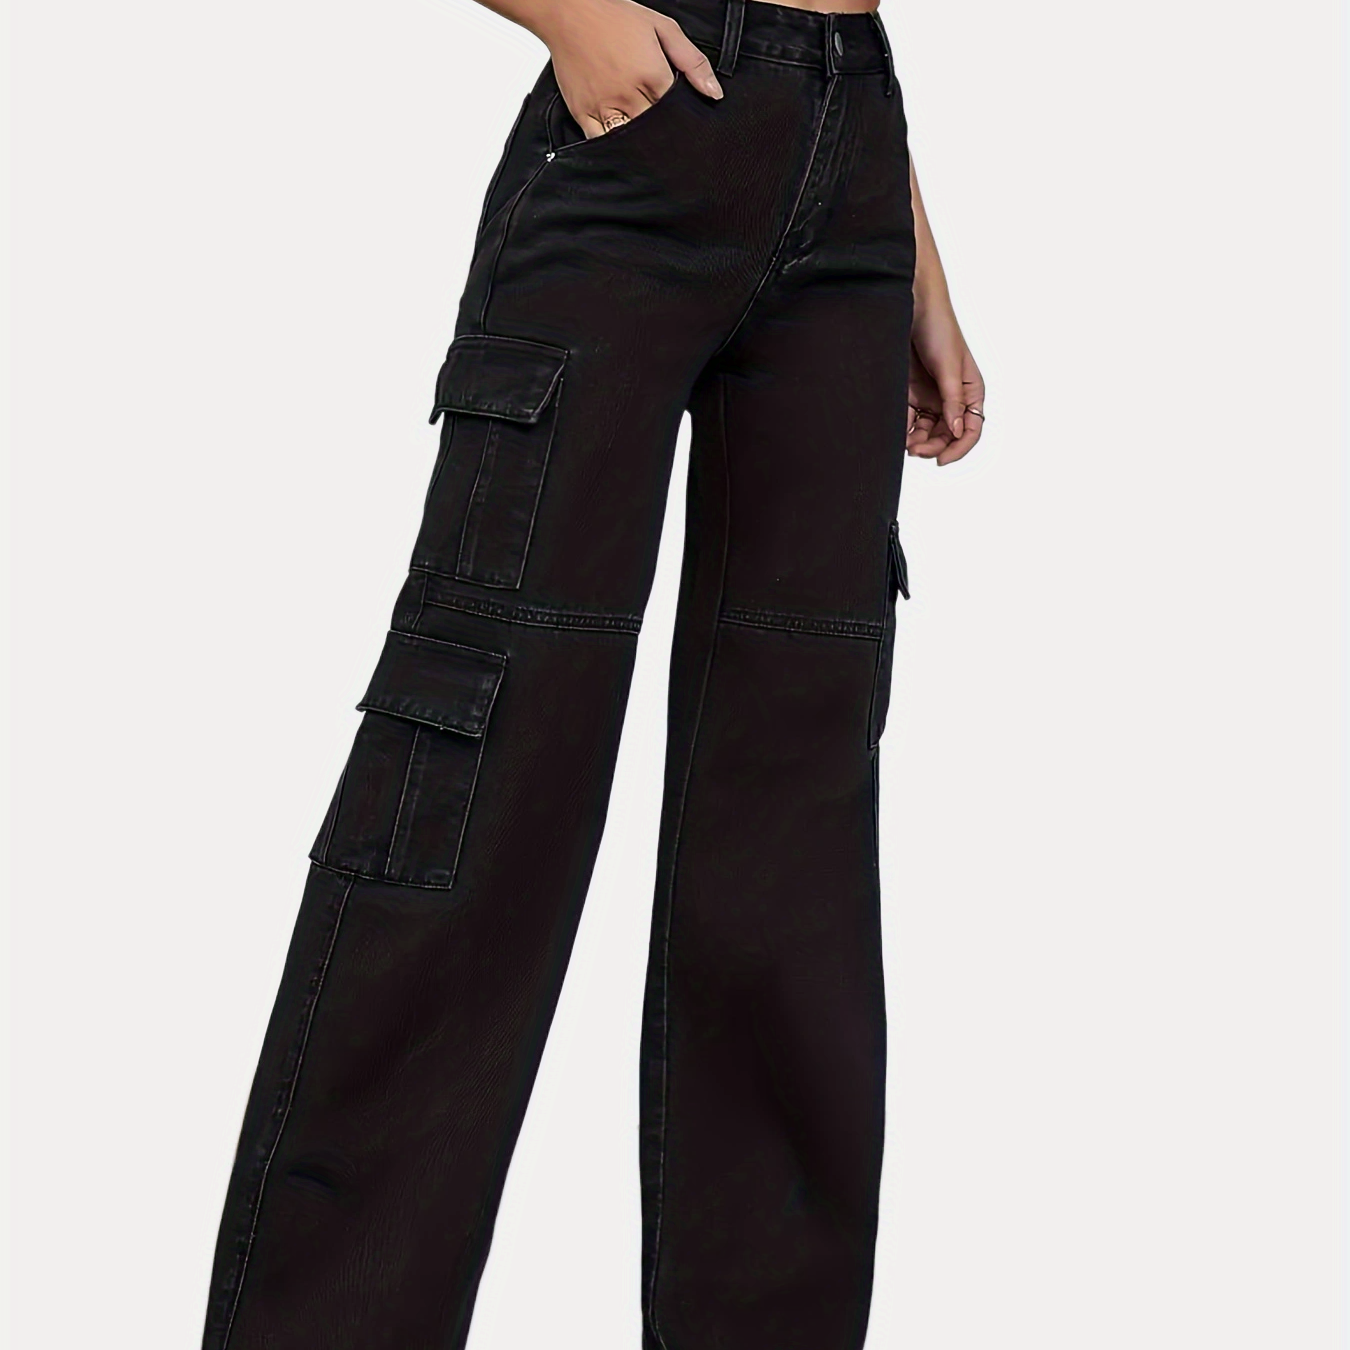 「lovevop」Flap Side Pocket Black High Waist Denim Pants, Cargo Pocket Casual Wide Leg Jeans, Stylish & Trendy, Women's Denim Jeans & Clothing